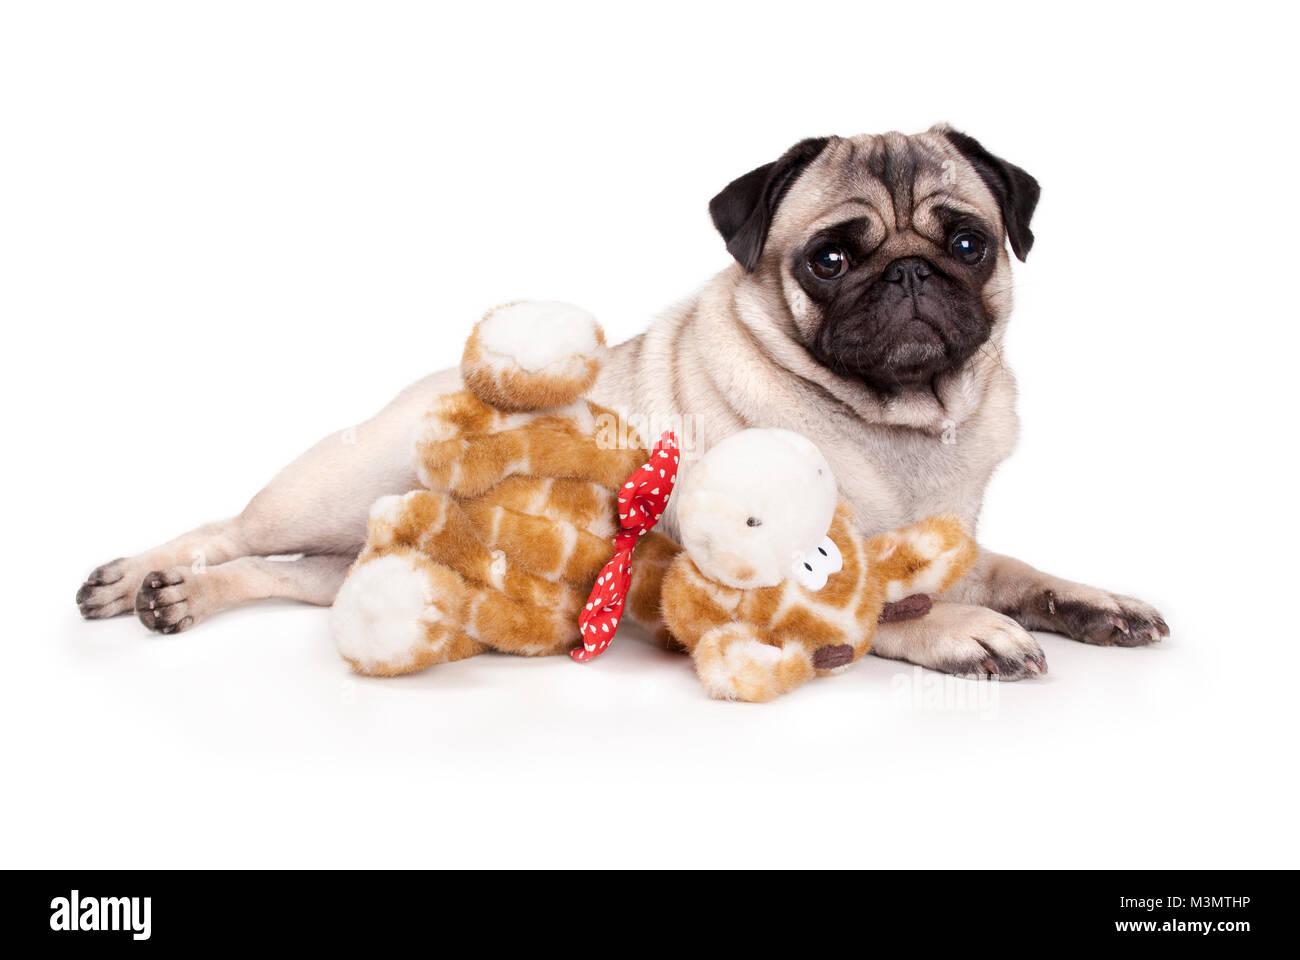 sweet pug puppy dog lying down like a model, with stuffed animal giraffe, on white background Stock Photo